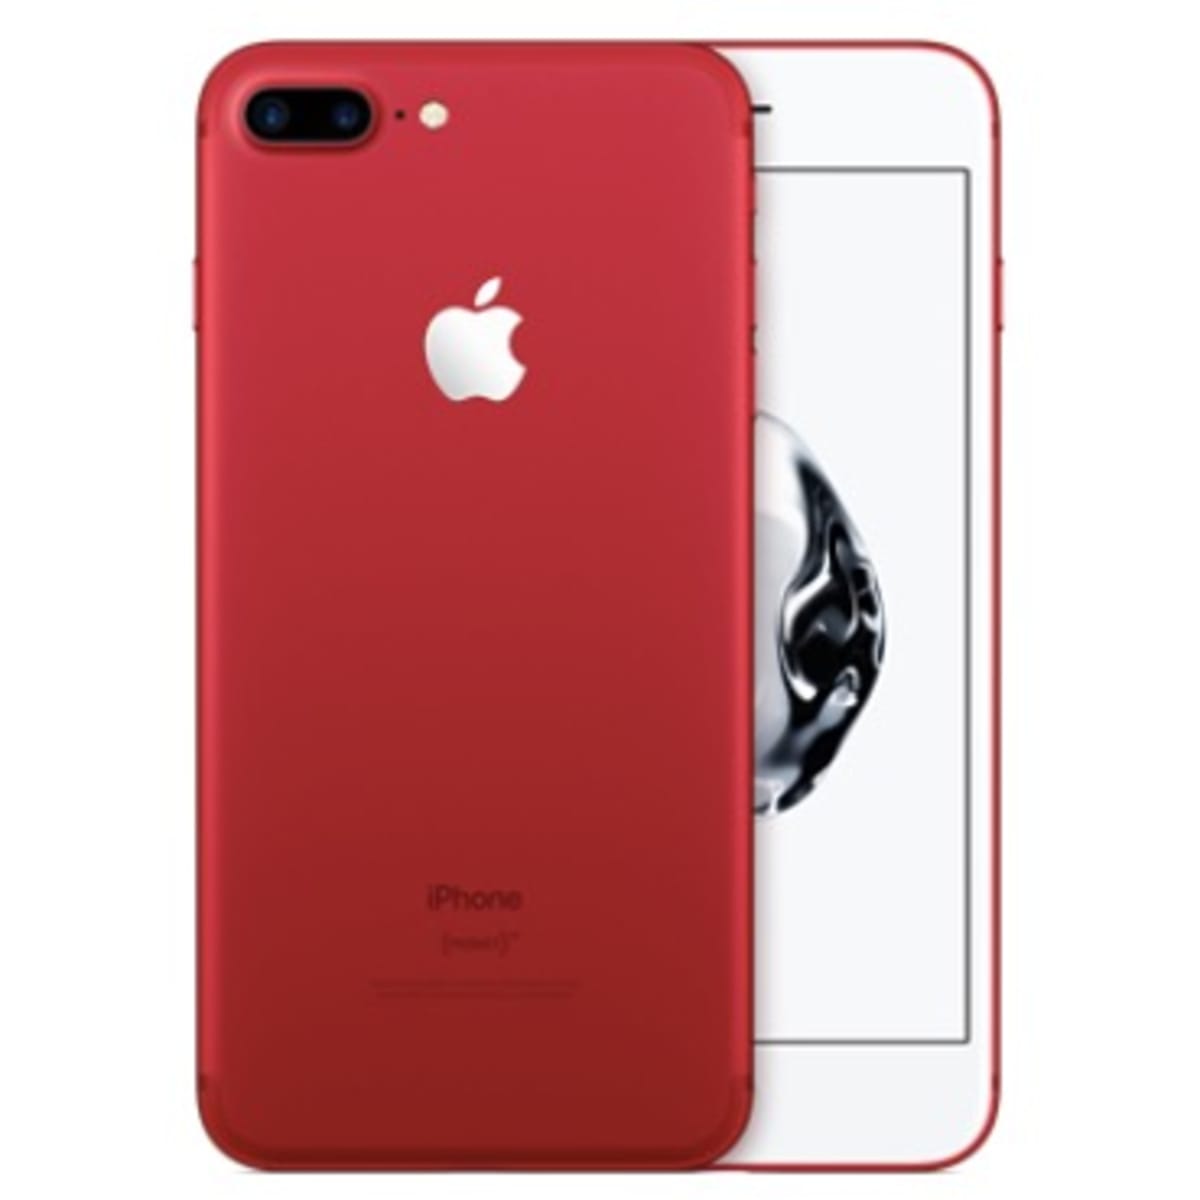 Apple iPhone 7 Plus - 128gb - Red | Konga Online Shopping